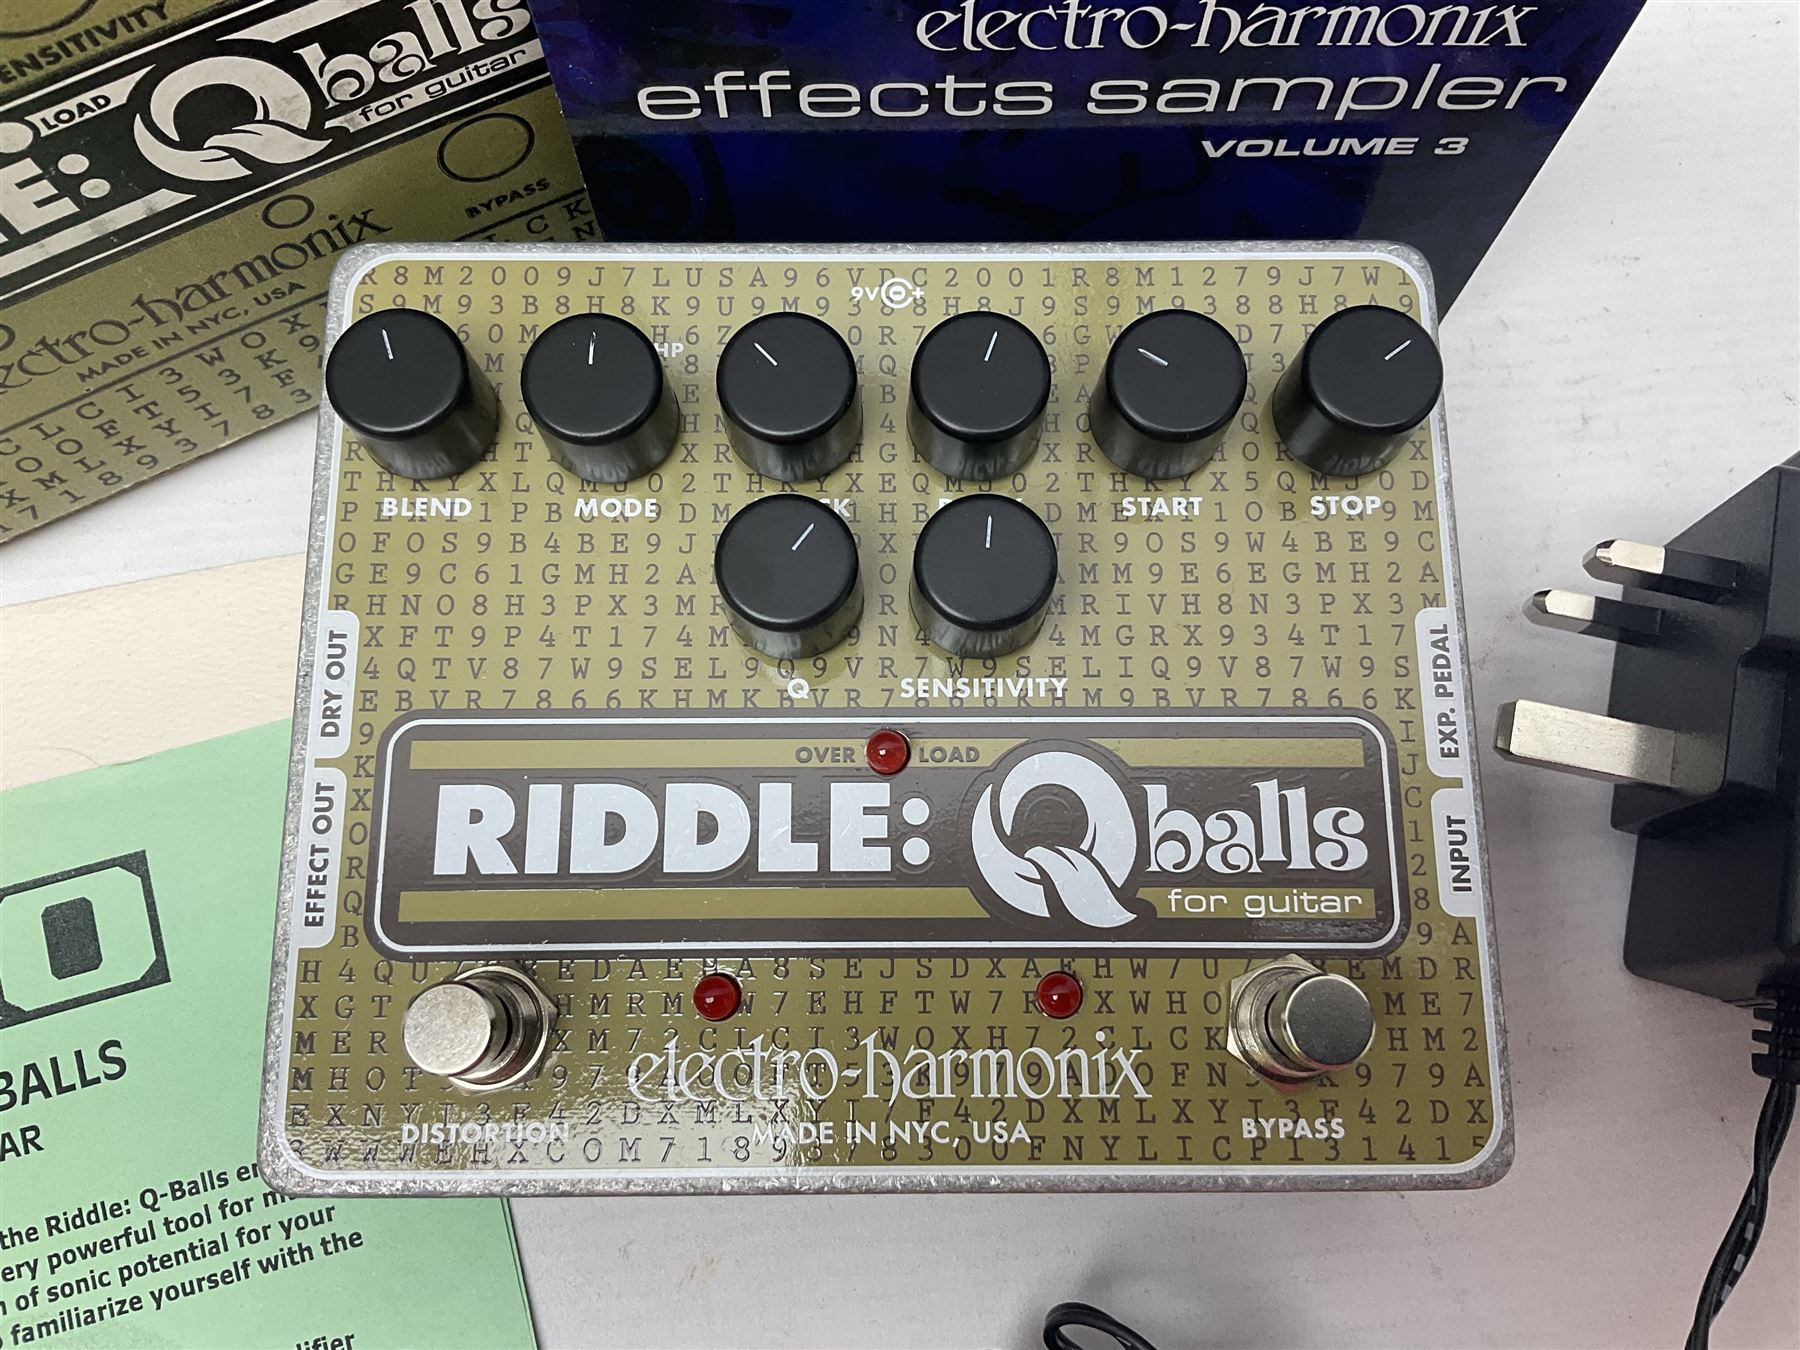 Electro Harmonix Riddle Qballs guitar pedal - Image 2 of 8